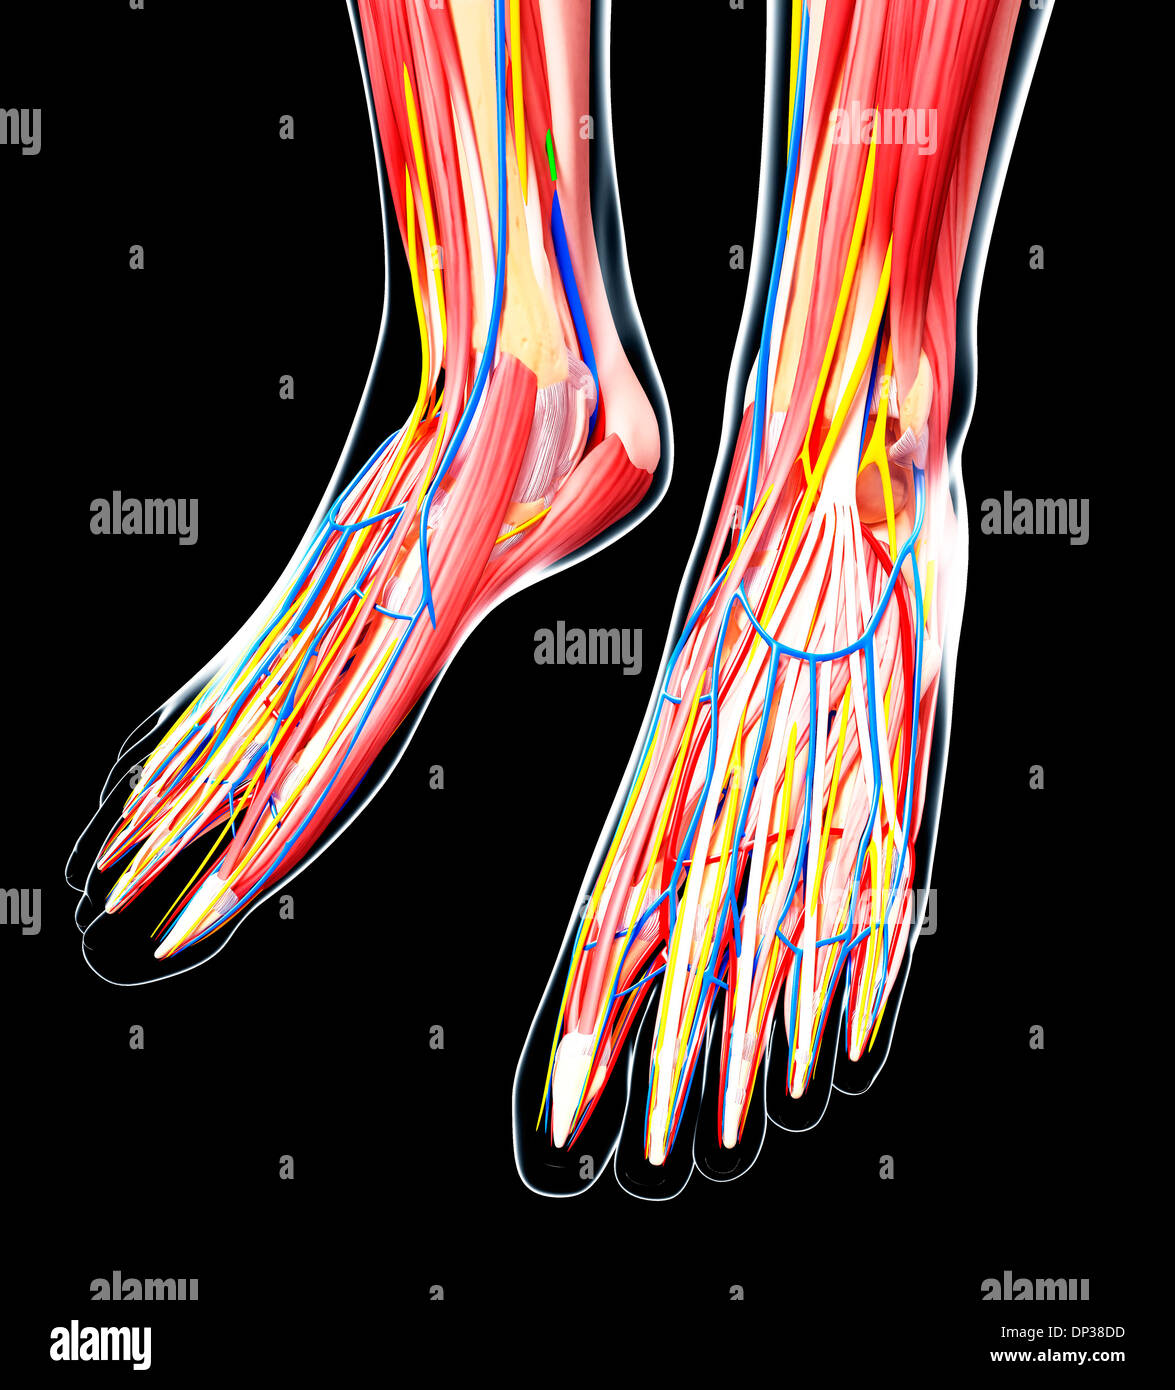 Human foot anatomy, artwork Stock Photo